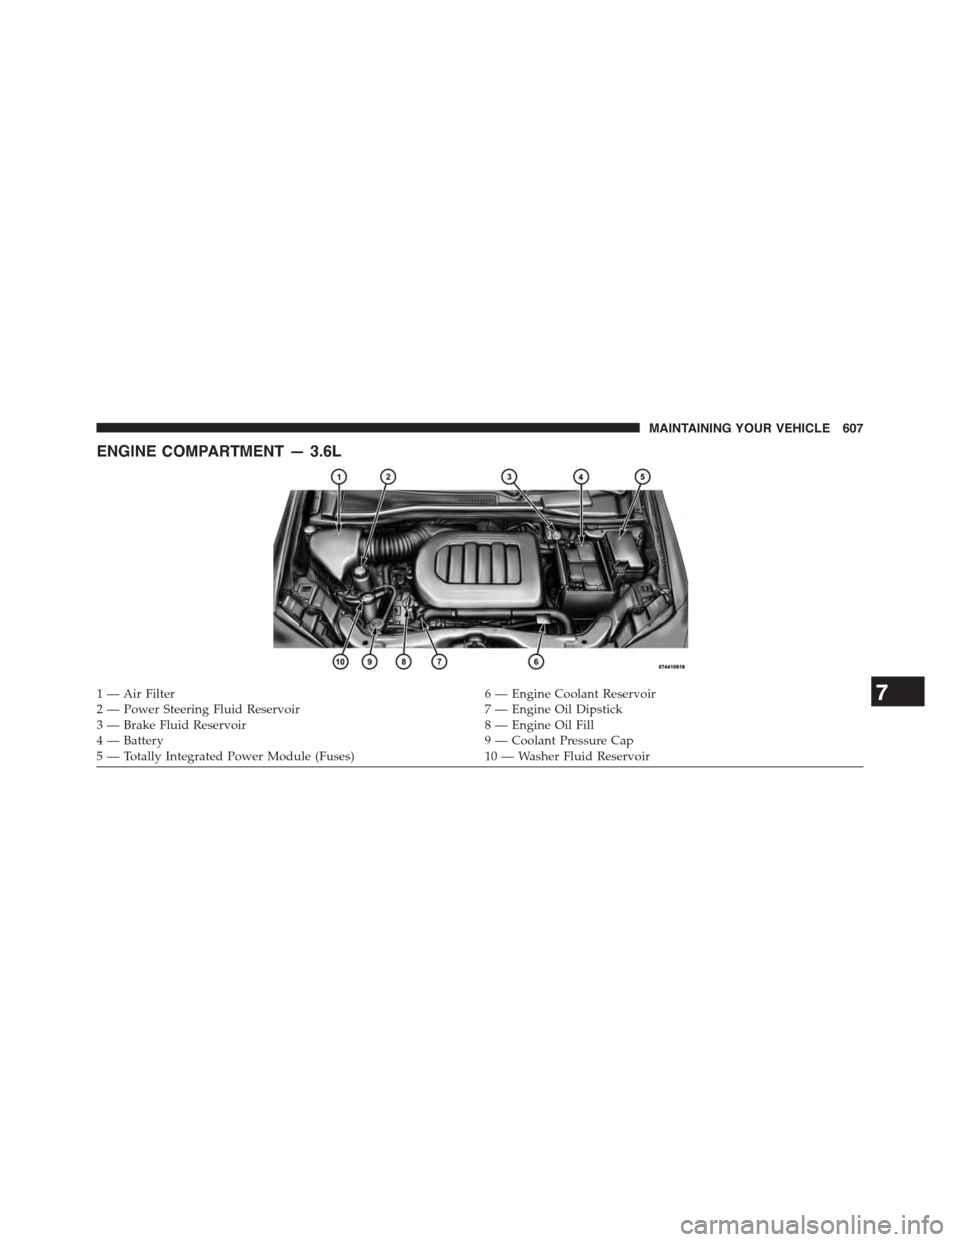 DODGE GRAND CARAVAN 2015 5.G Owners Manual ENGINE COMPARTMENT — 3.6L
1—AirFilter6—EngineCoolantReservoir2 — Power Steering Fluid Reservoir7 — Engine Oil Dipstick3 — Brake Fluid Reservoir8 — Engine Oil Fill4 — Battery9 — Coola